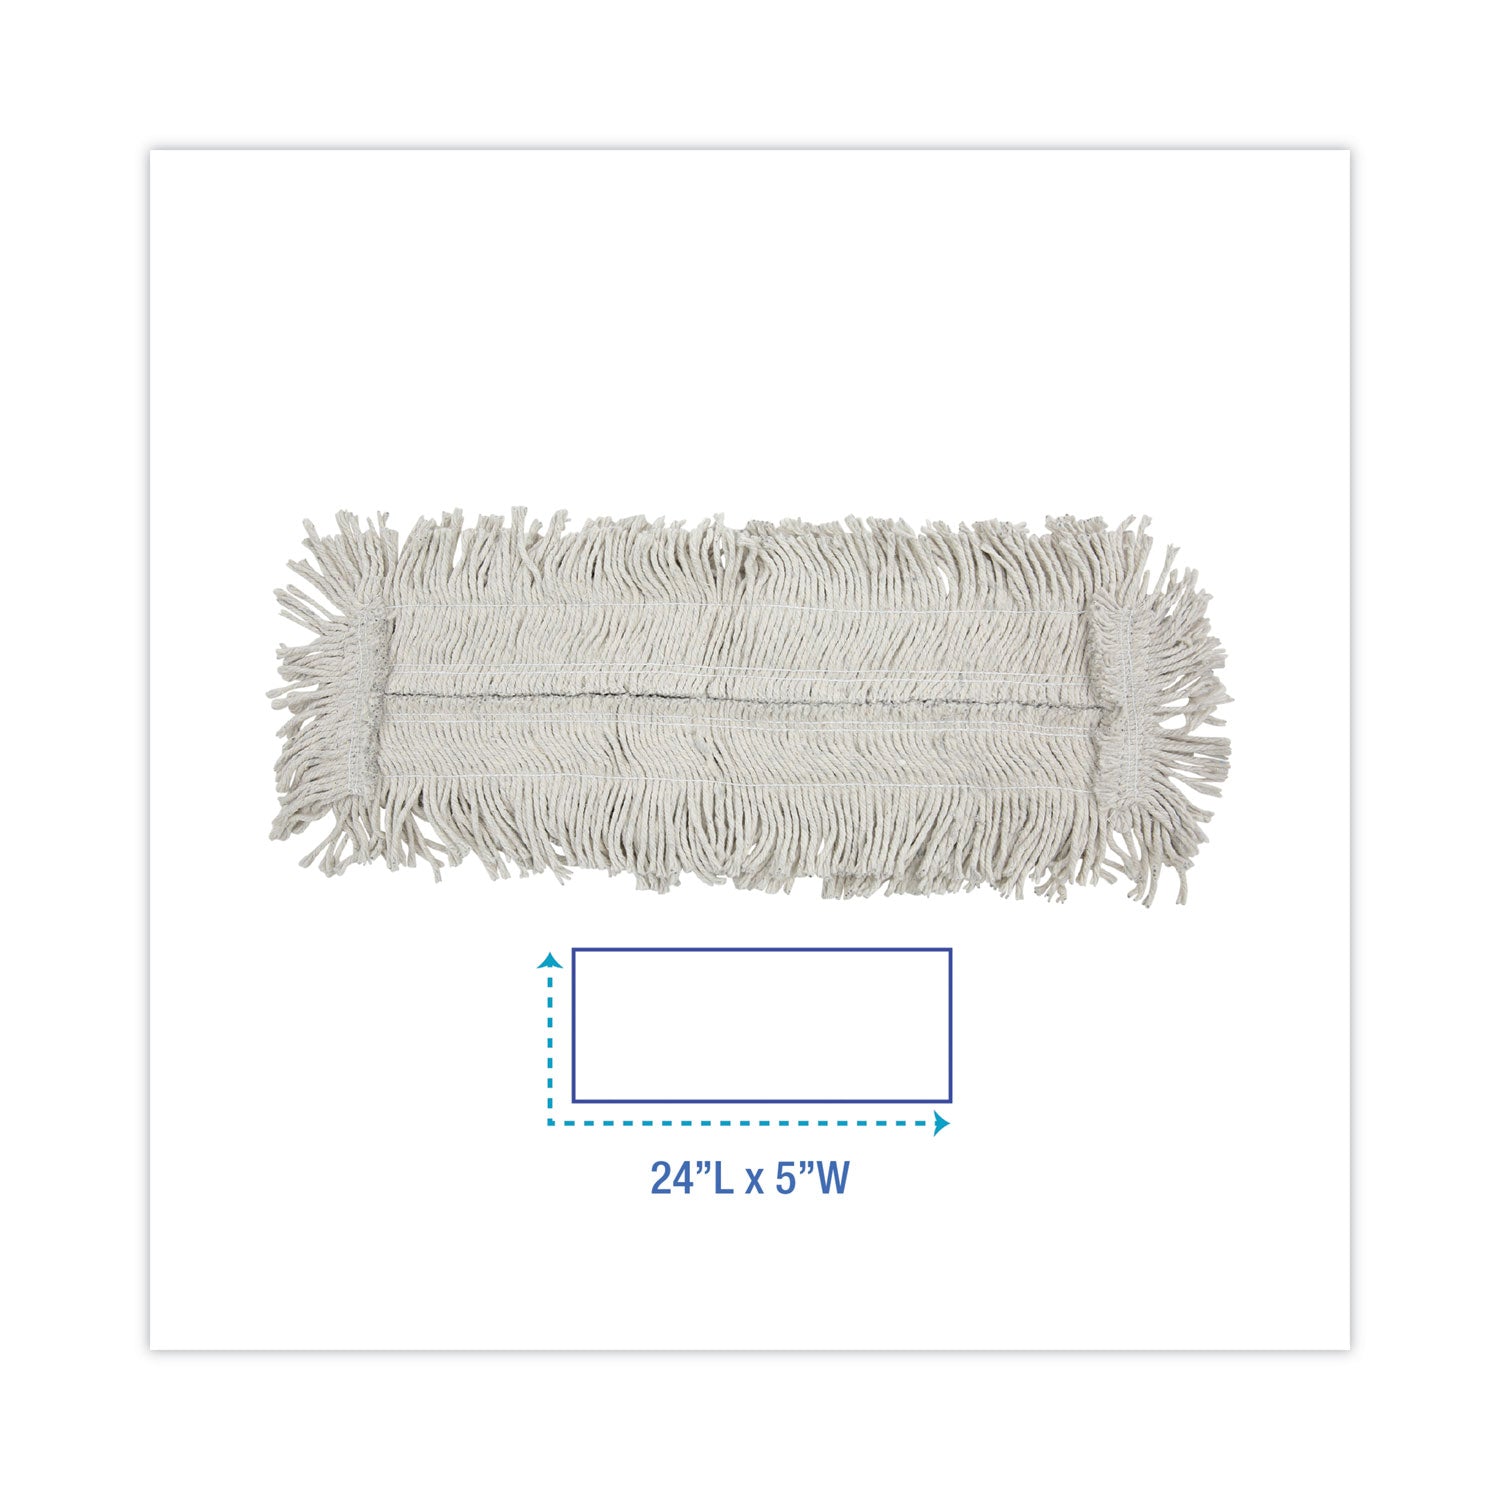 Disposable Cut End Dust Mop Head, Cotton/Synthetic, 24w x 5d, White - 